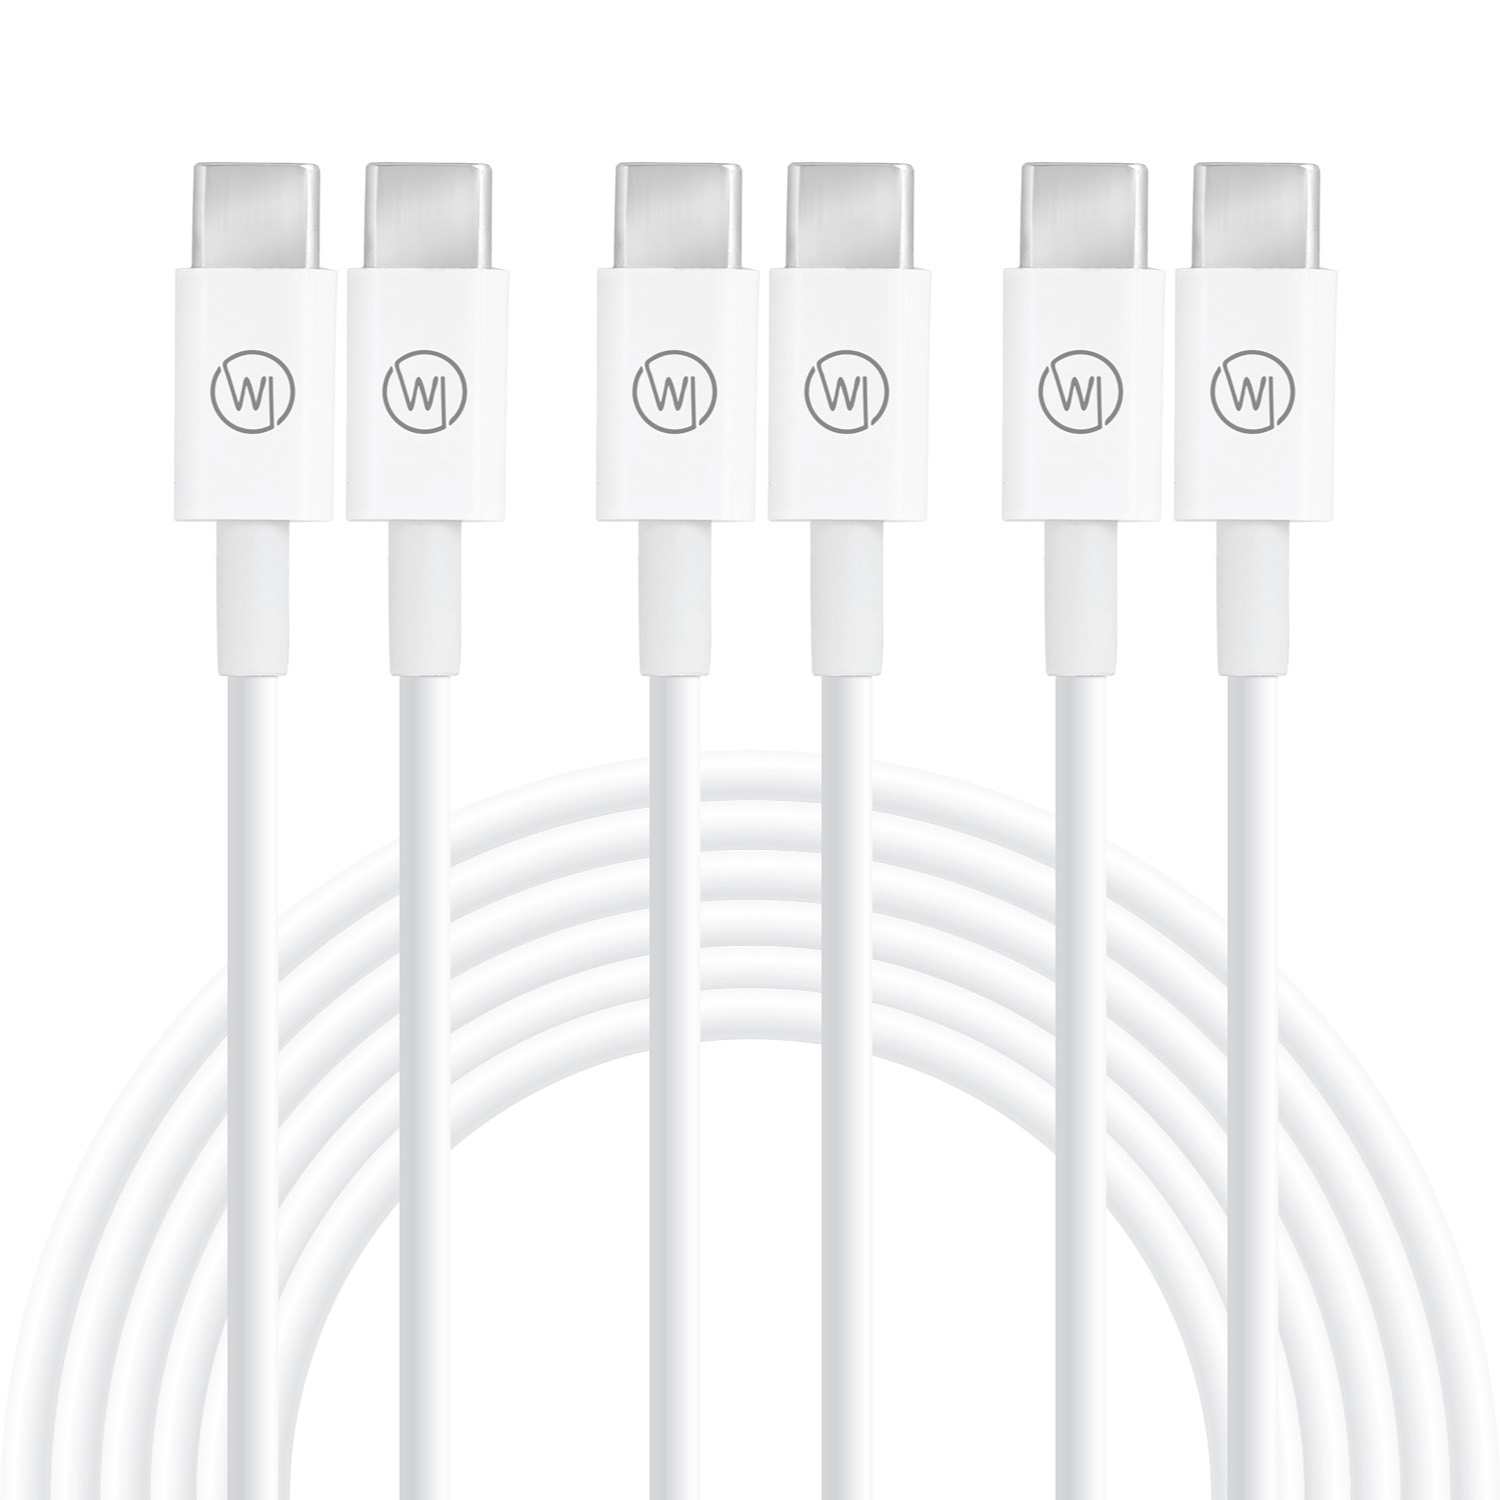 WICKED CHILI 3x USB m, / (1m iPad und 1 MacBook Ladekabel, Fast 60W) USB-C Pro / Charge Air, 20V / auf 3A für Ladekabel weiss Kabel C